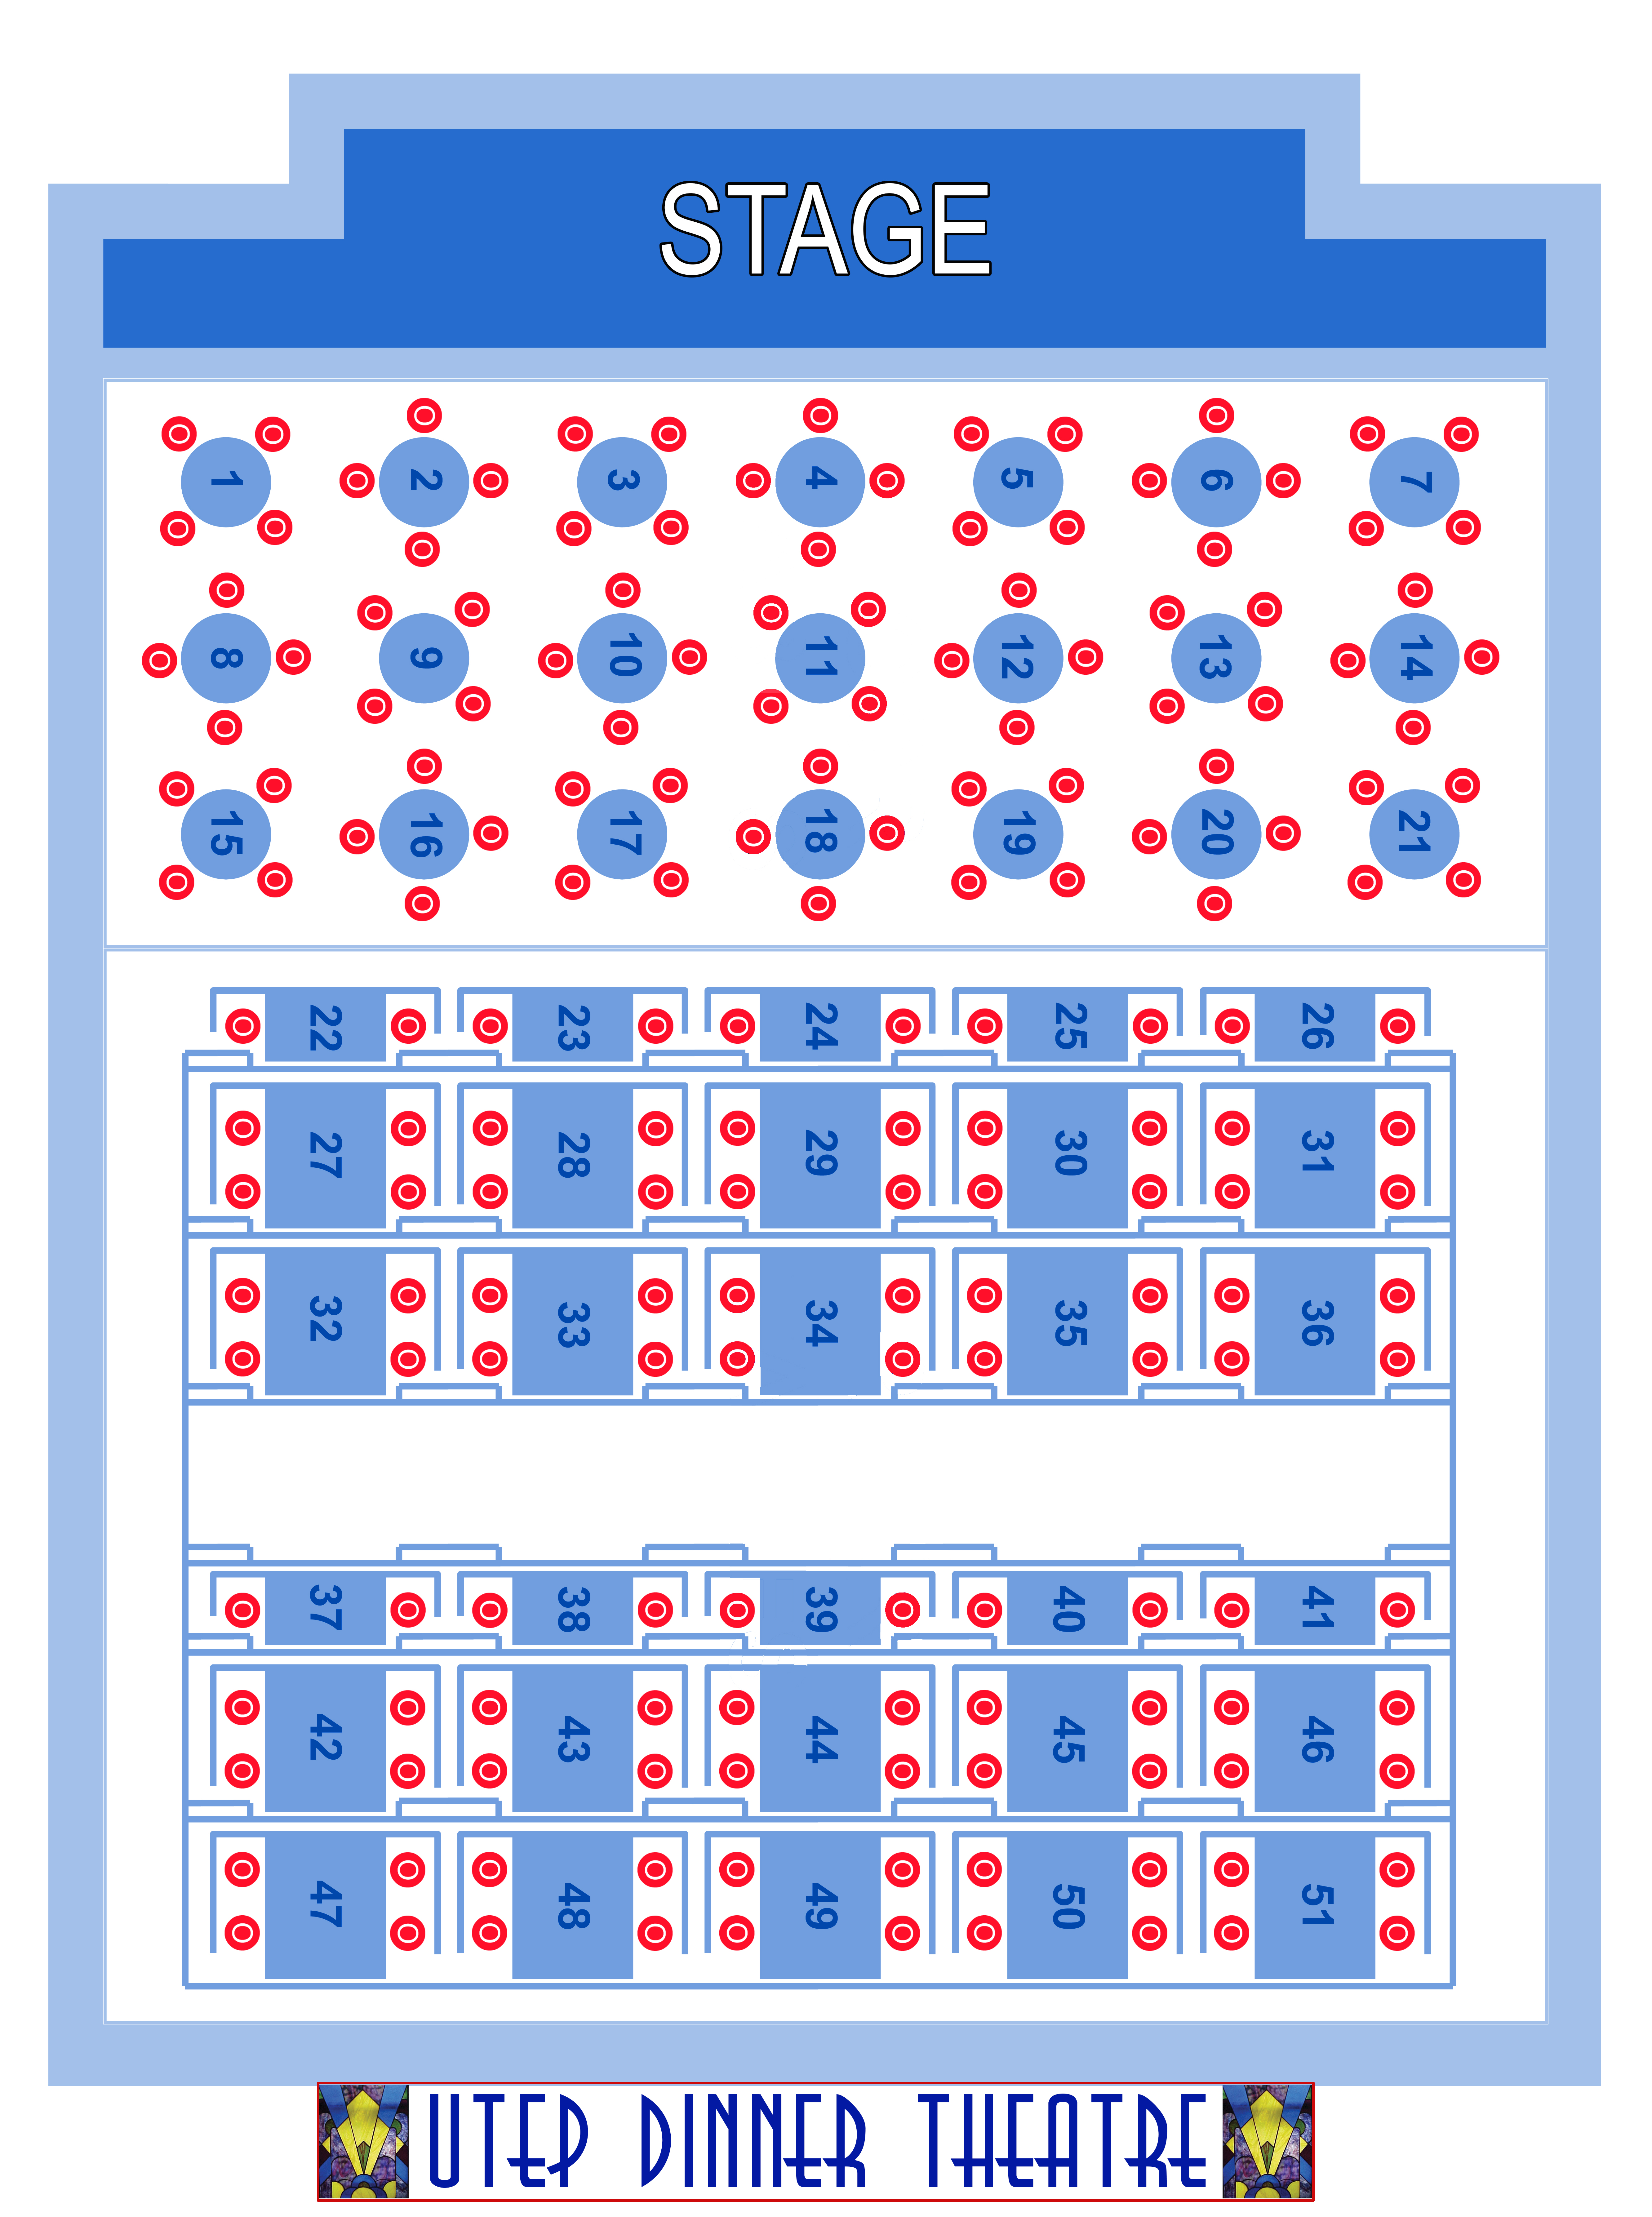 utep seating chart - Part.tscoreks.org